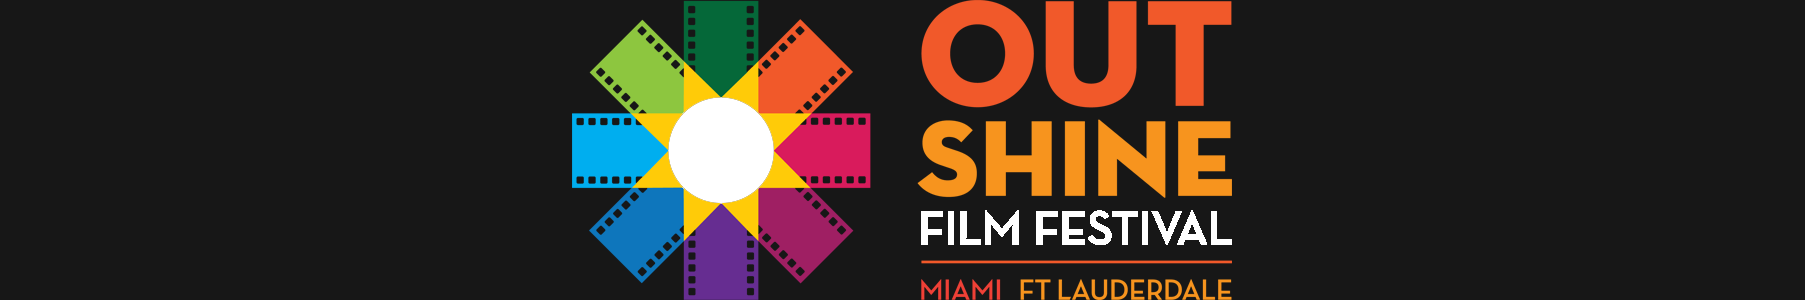 Out Shine Film Festival